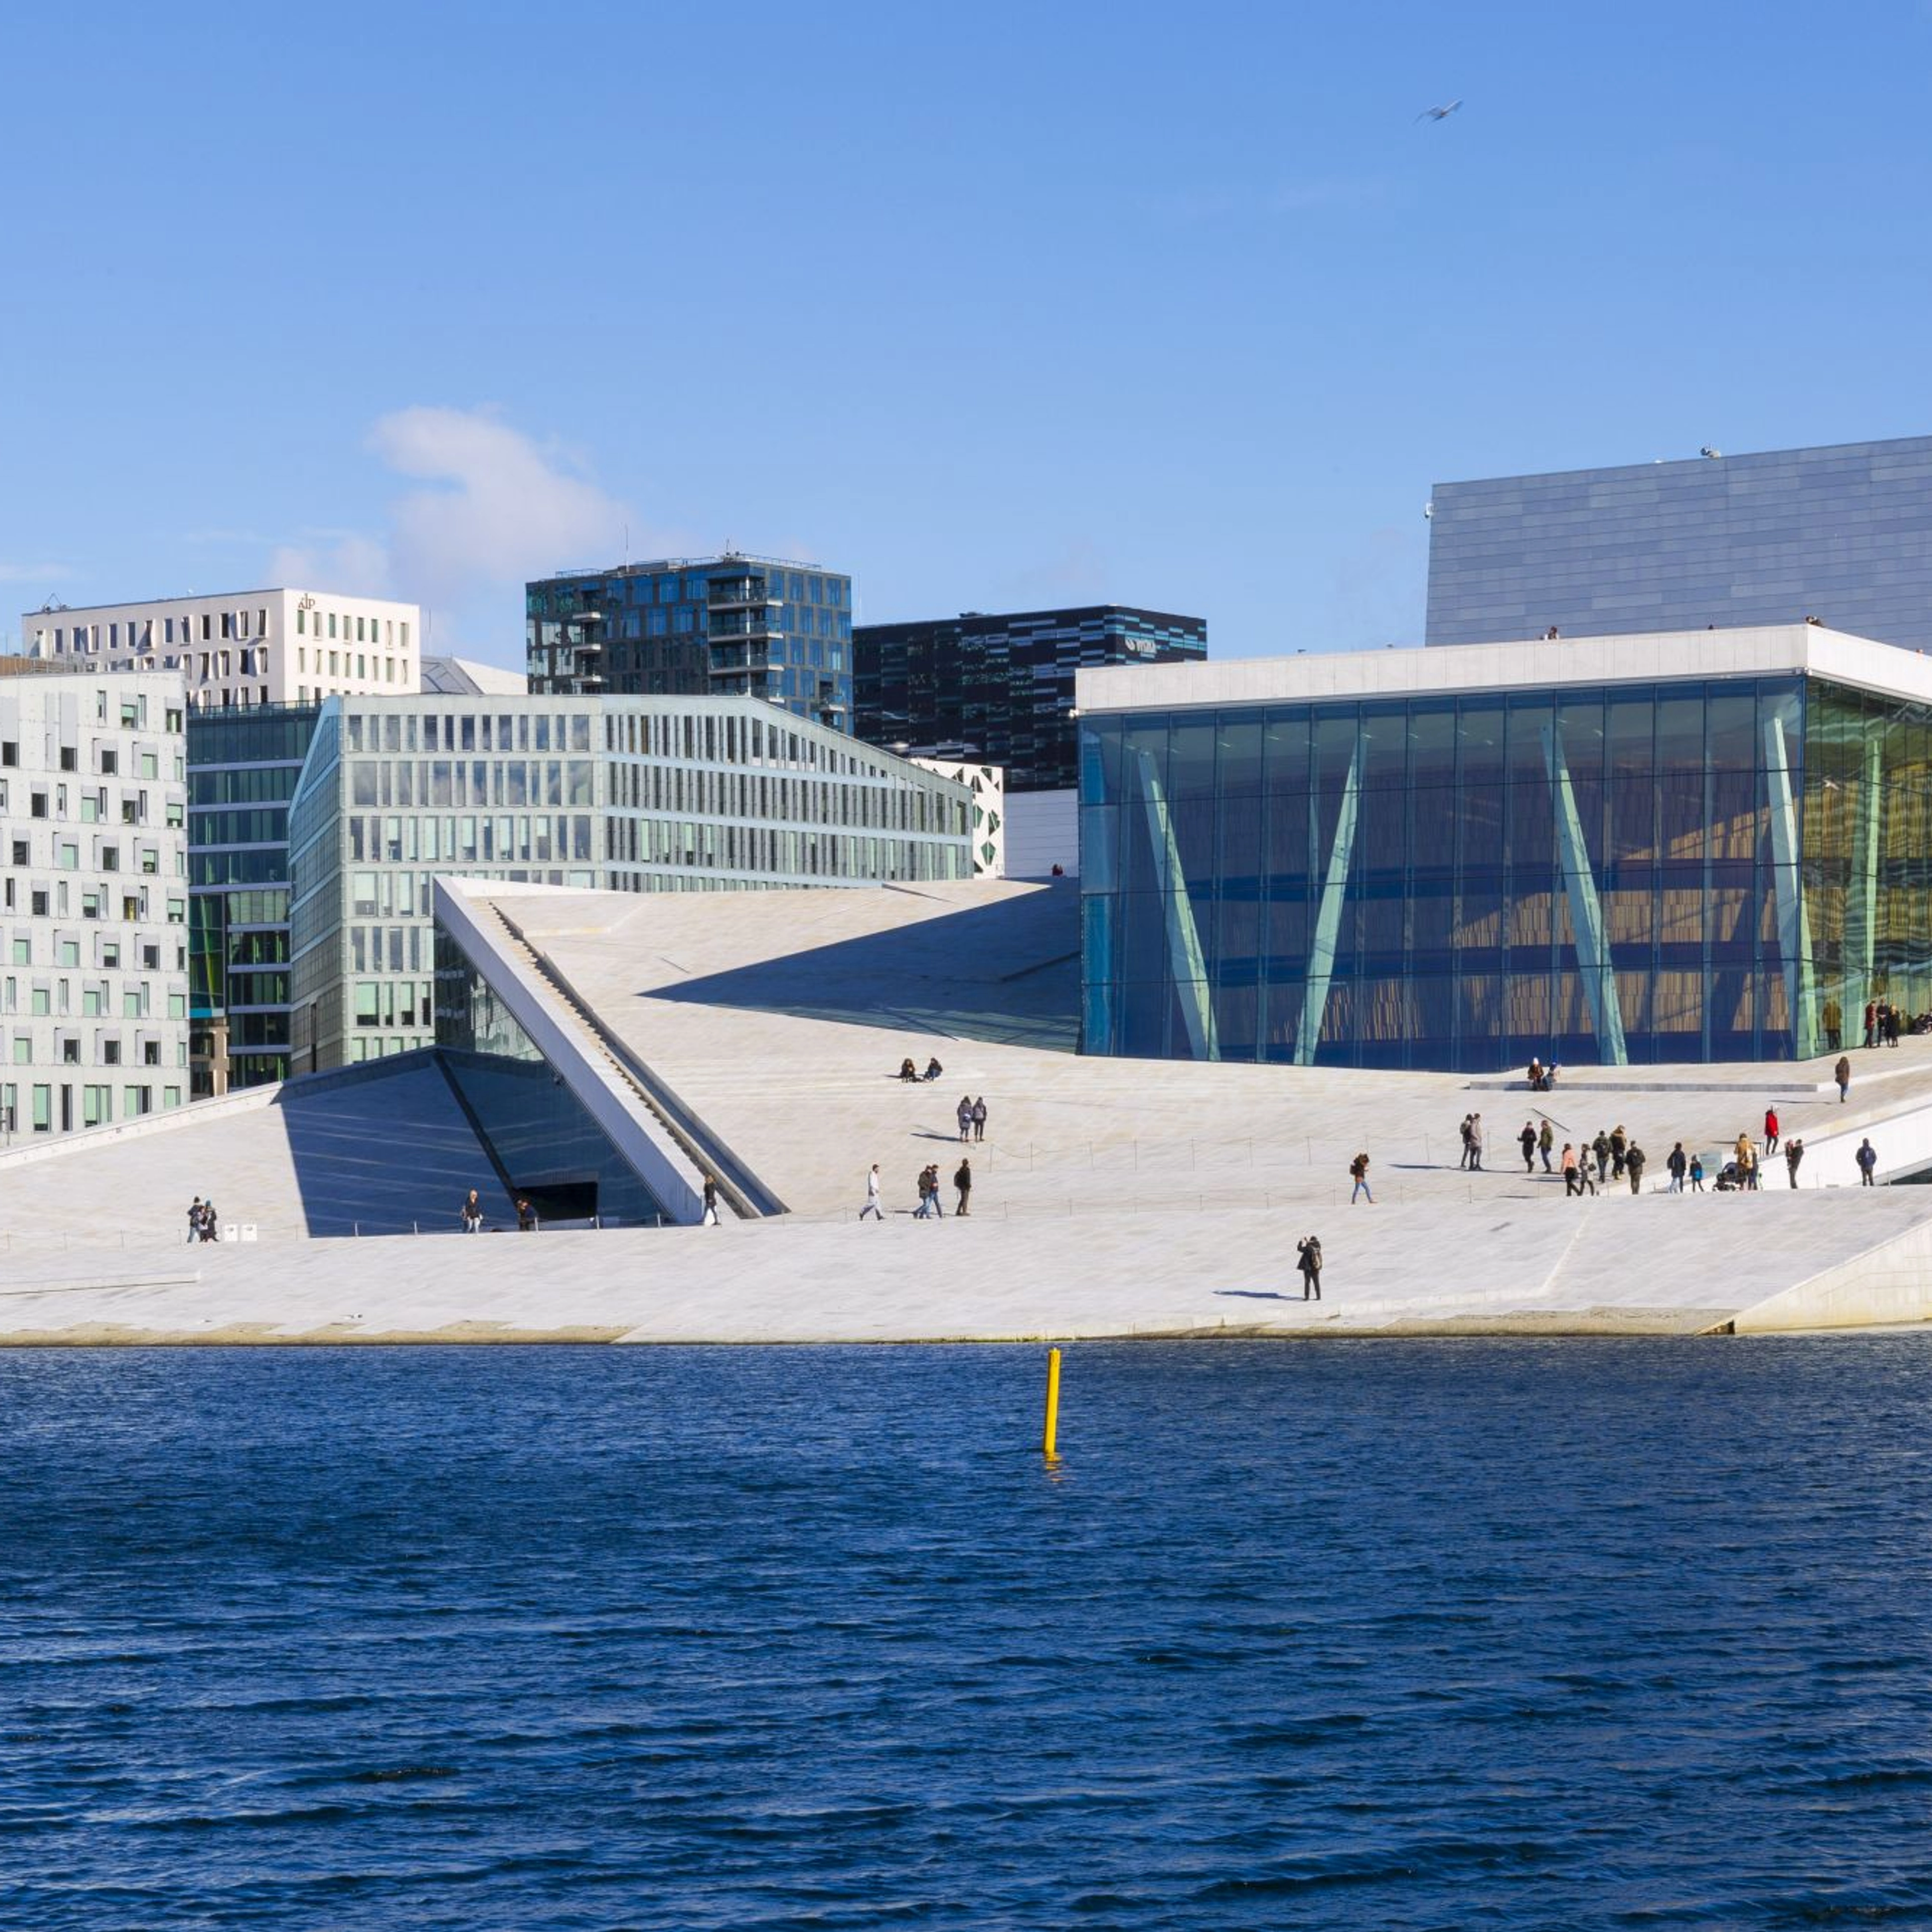 The Opera House - Oslo, Norway